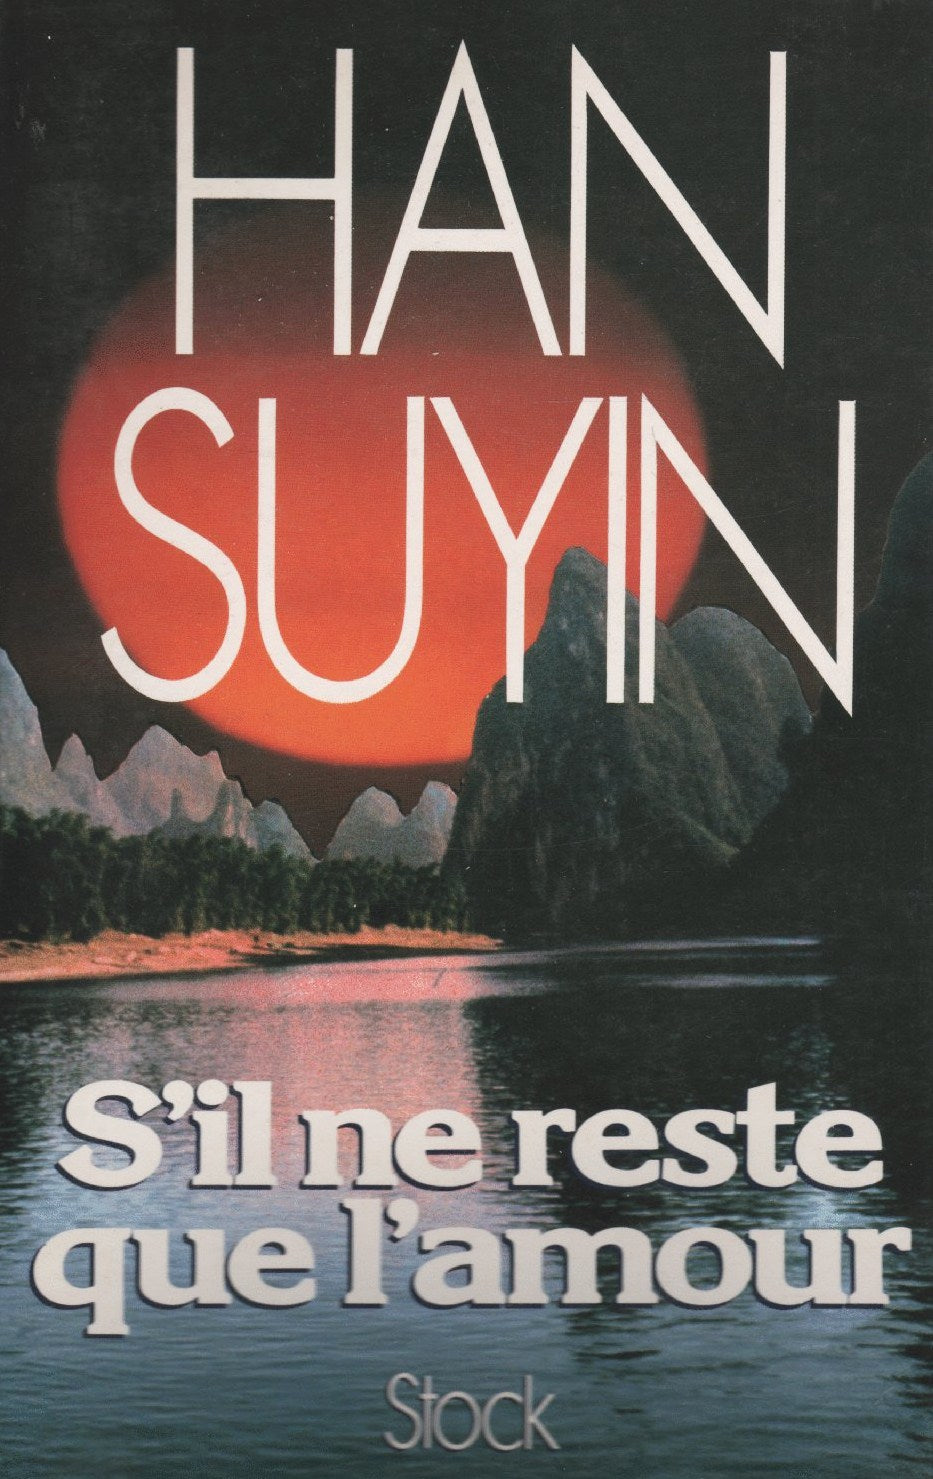 Livre ISBN 2234019796 S'il ne reste que l'amour (Han Suyin)